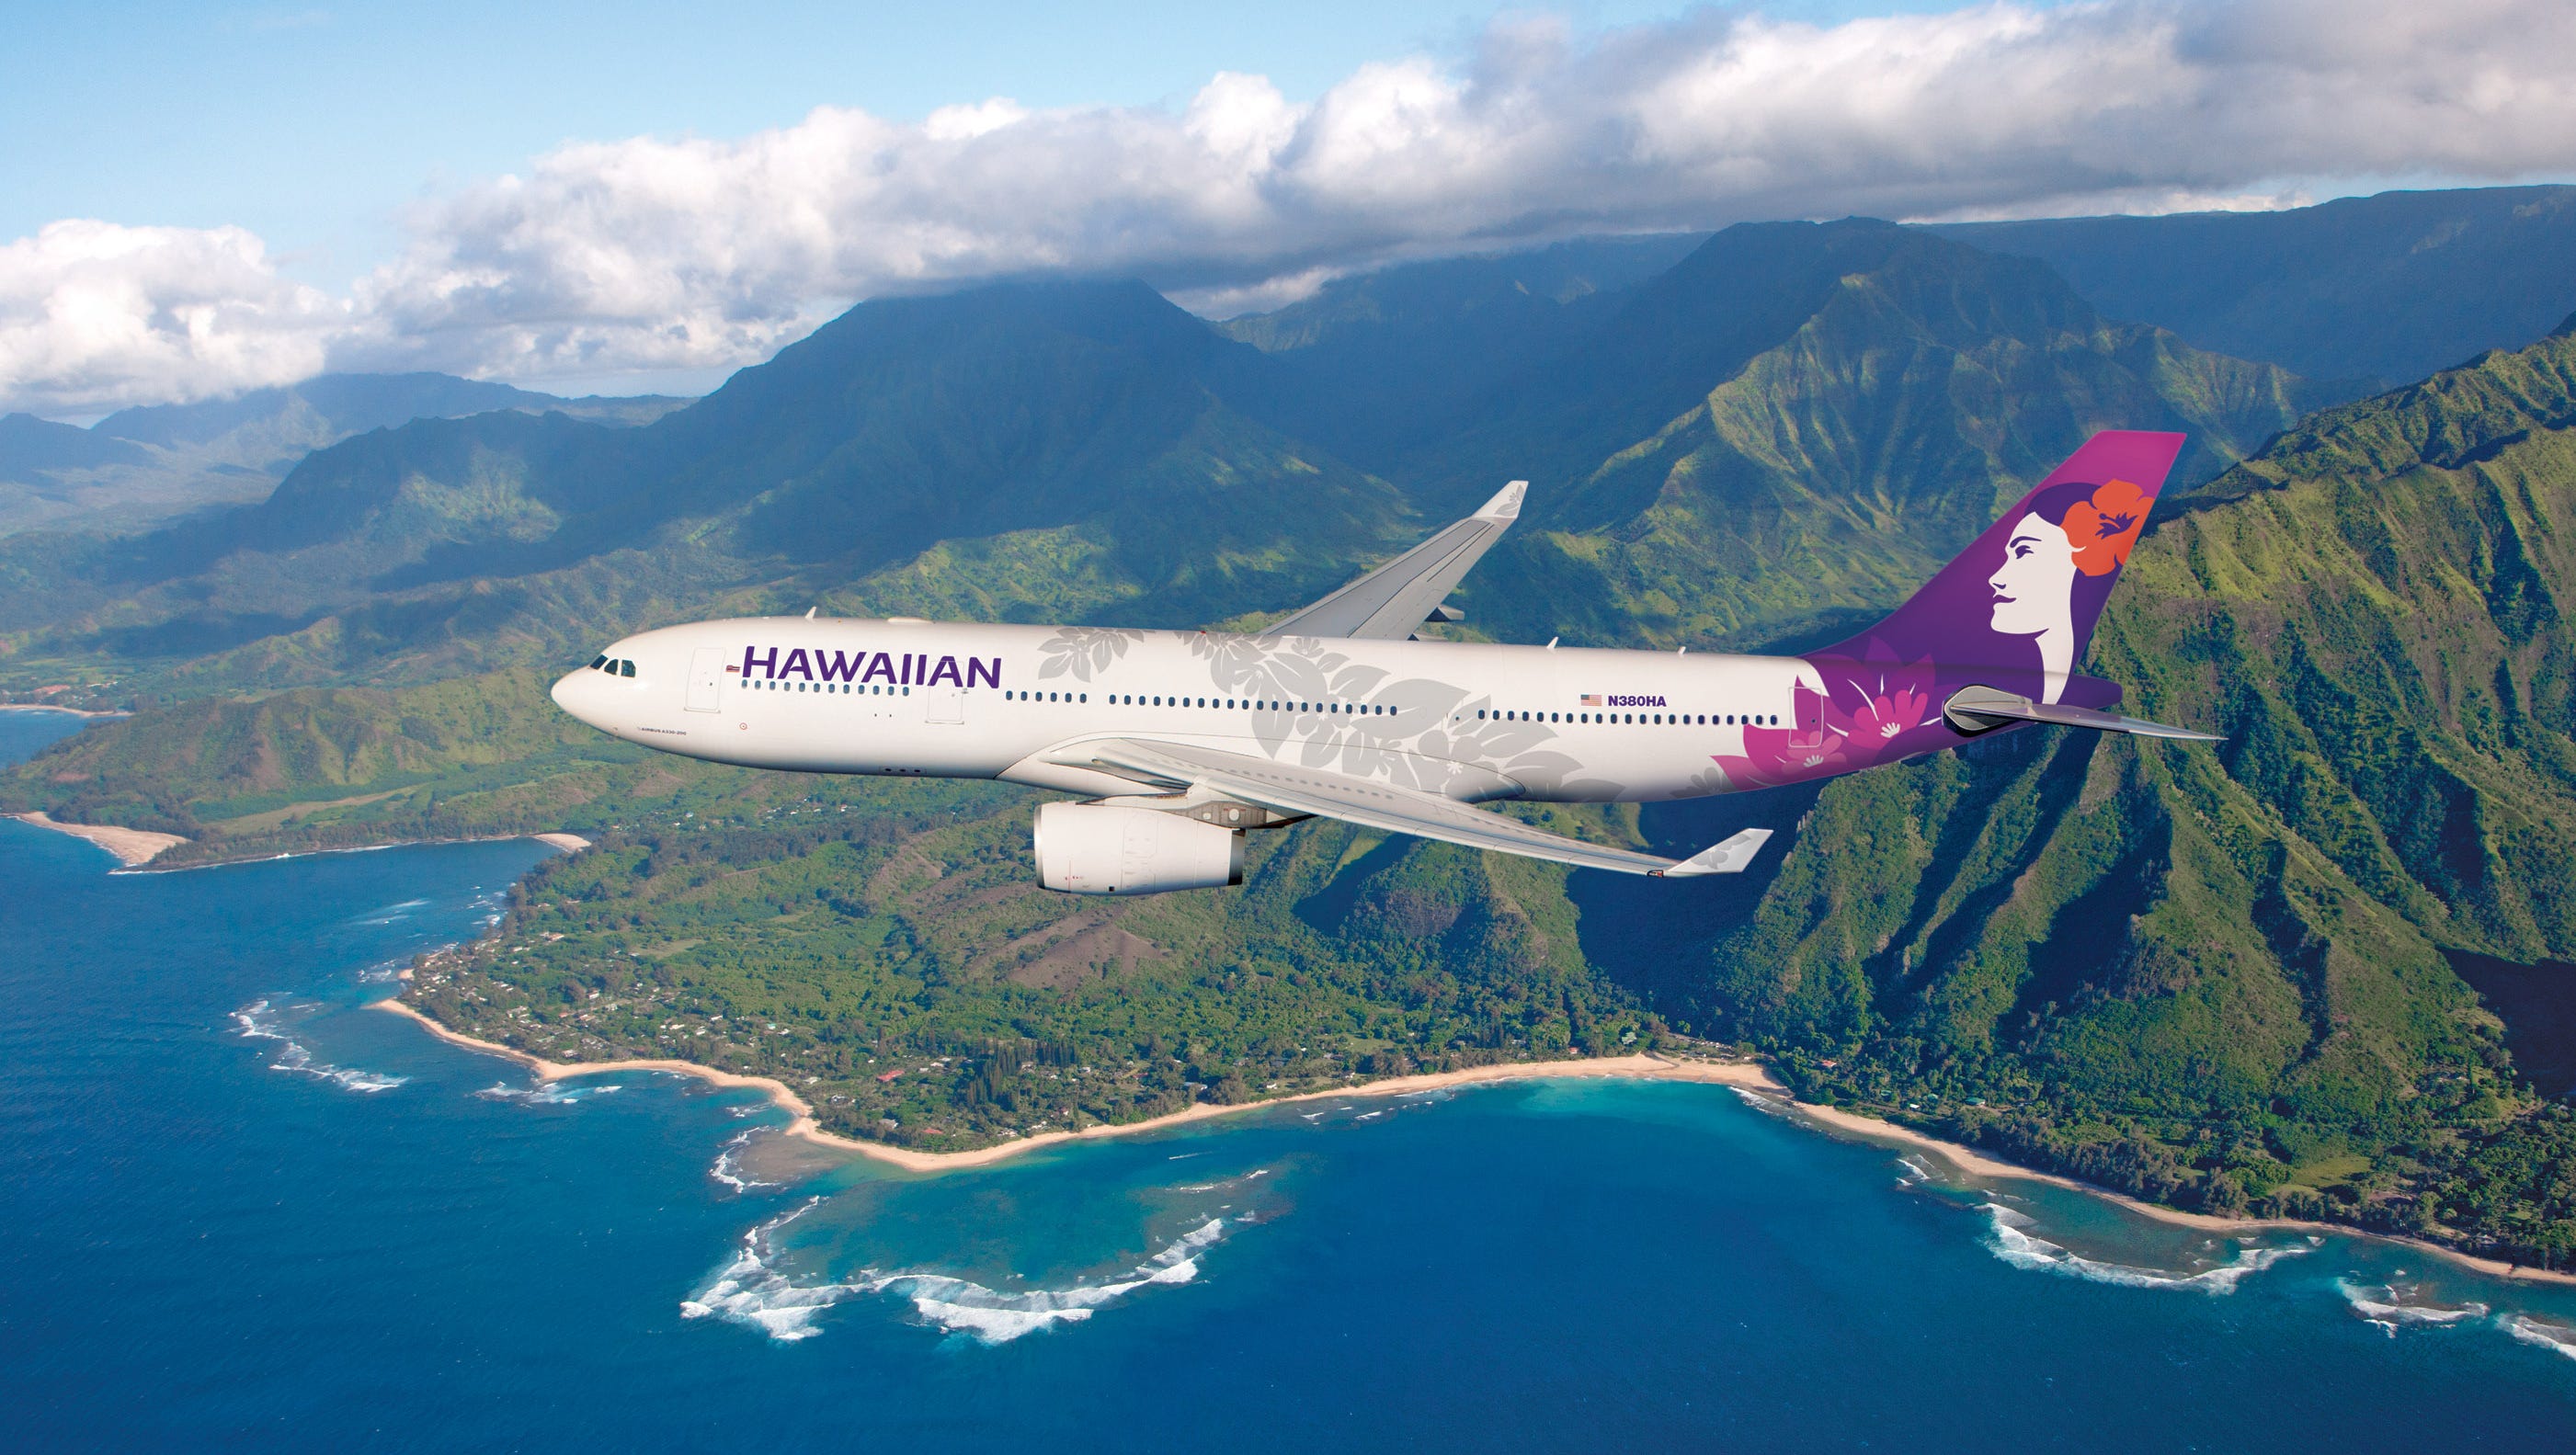 hawaiian-updates-its-aircraft-livery-logo